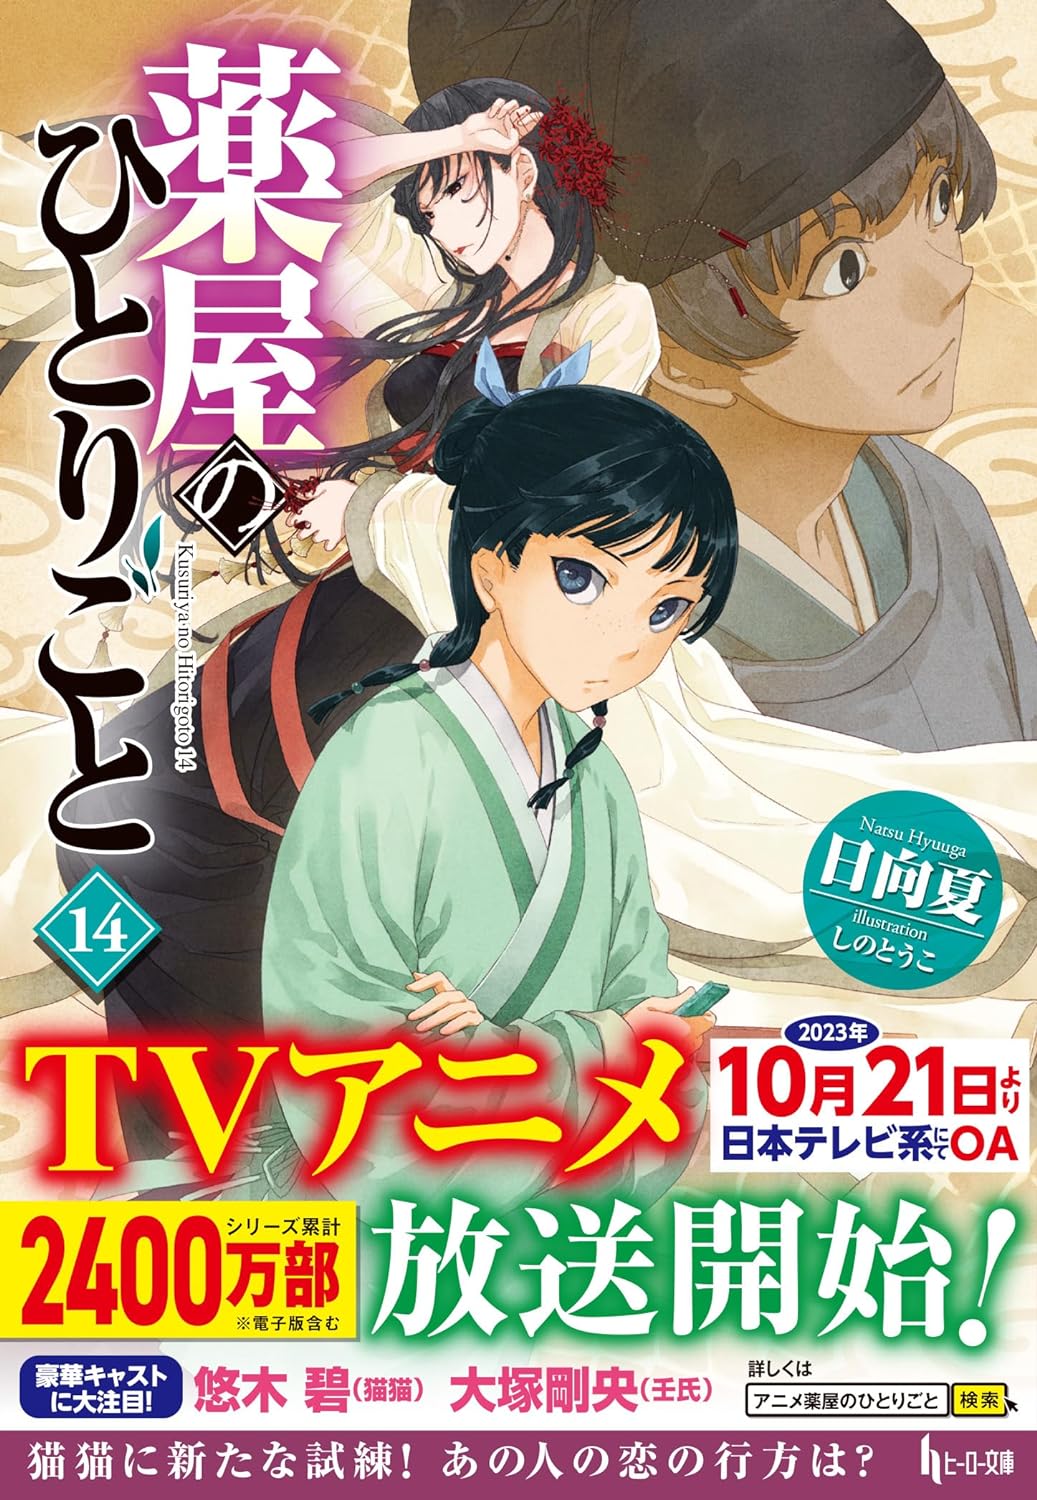 Kusuriya no Hitorigoto (The Apothecary Diaries) - Episodul 02 - Manga-Kids  ♥ De la fani pentru fani